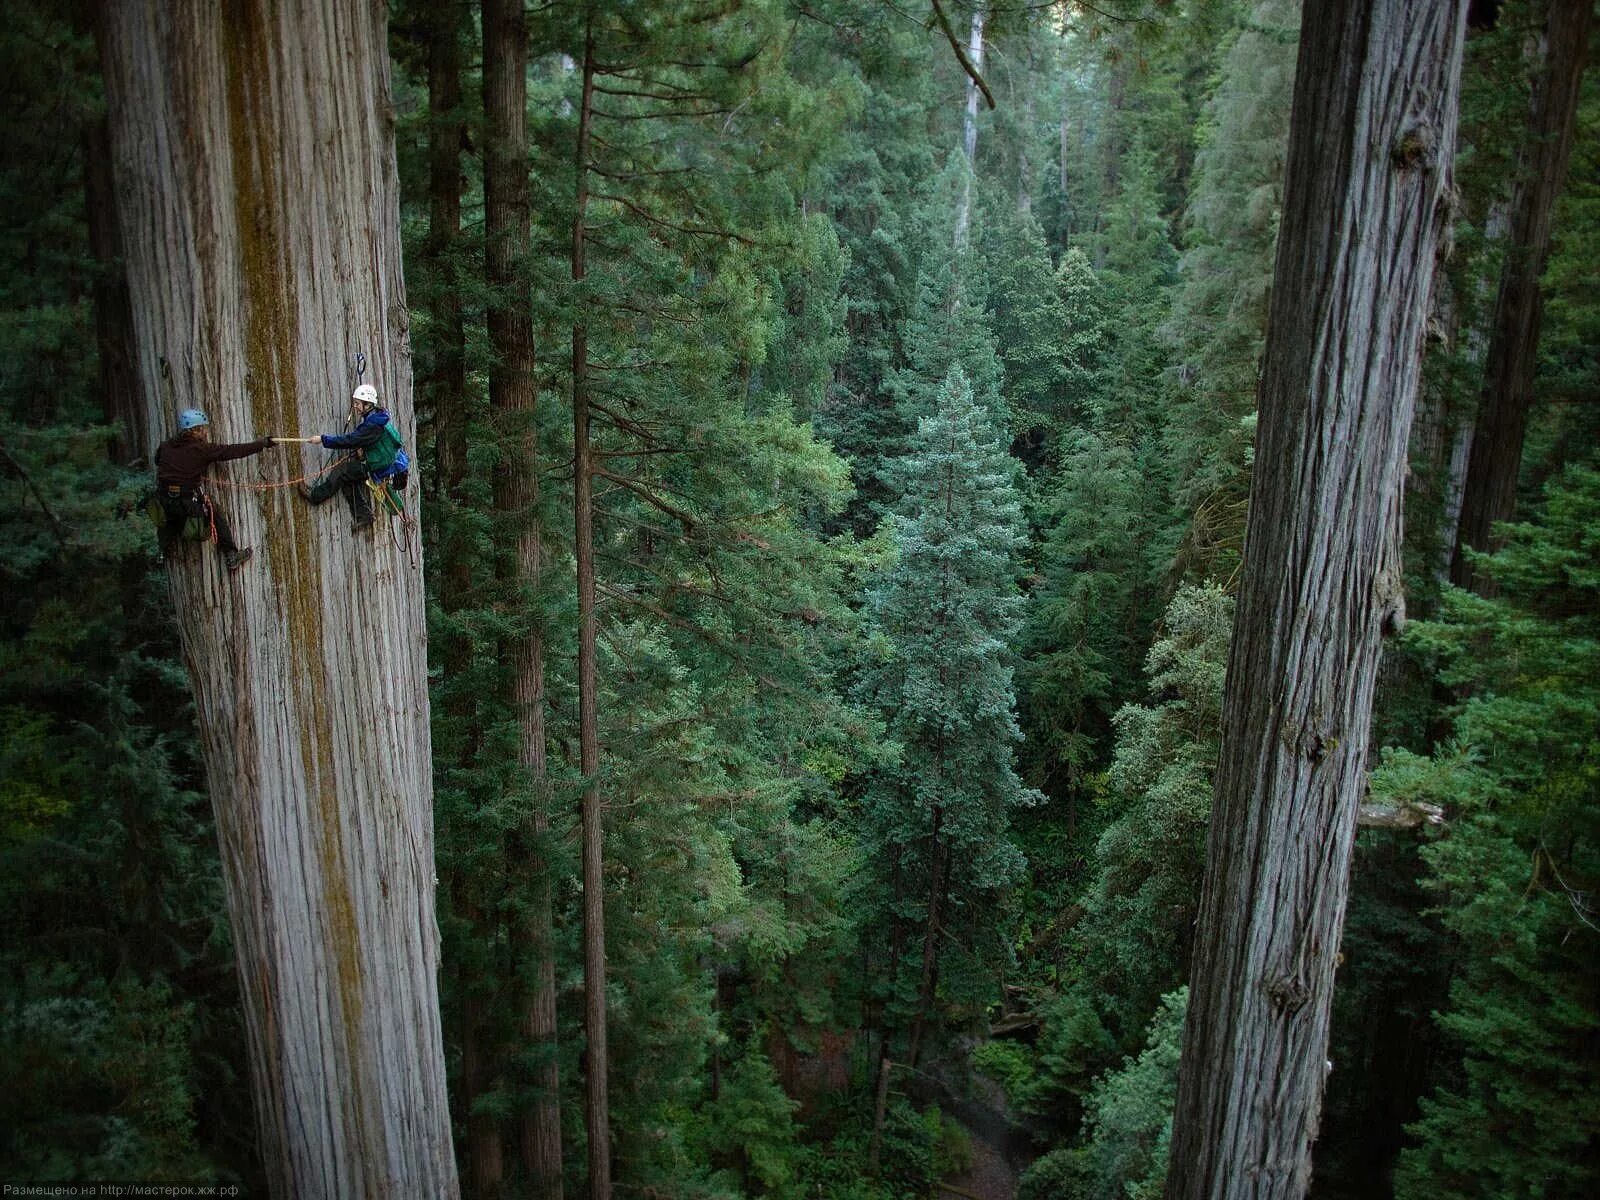 Дерево 6 метров. Калифорнийская Секвойя Гиперион. Секвойя вечнозелёная Гиперион. Секвойя дерево Гиперион. Национальный парк Редвуд Гиперион.